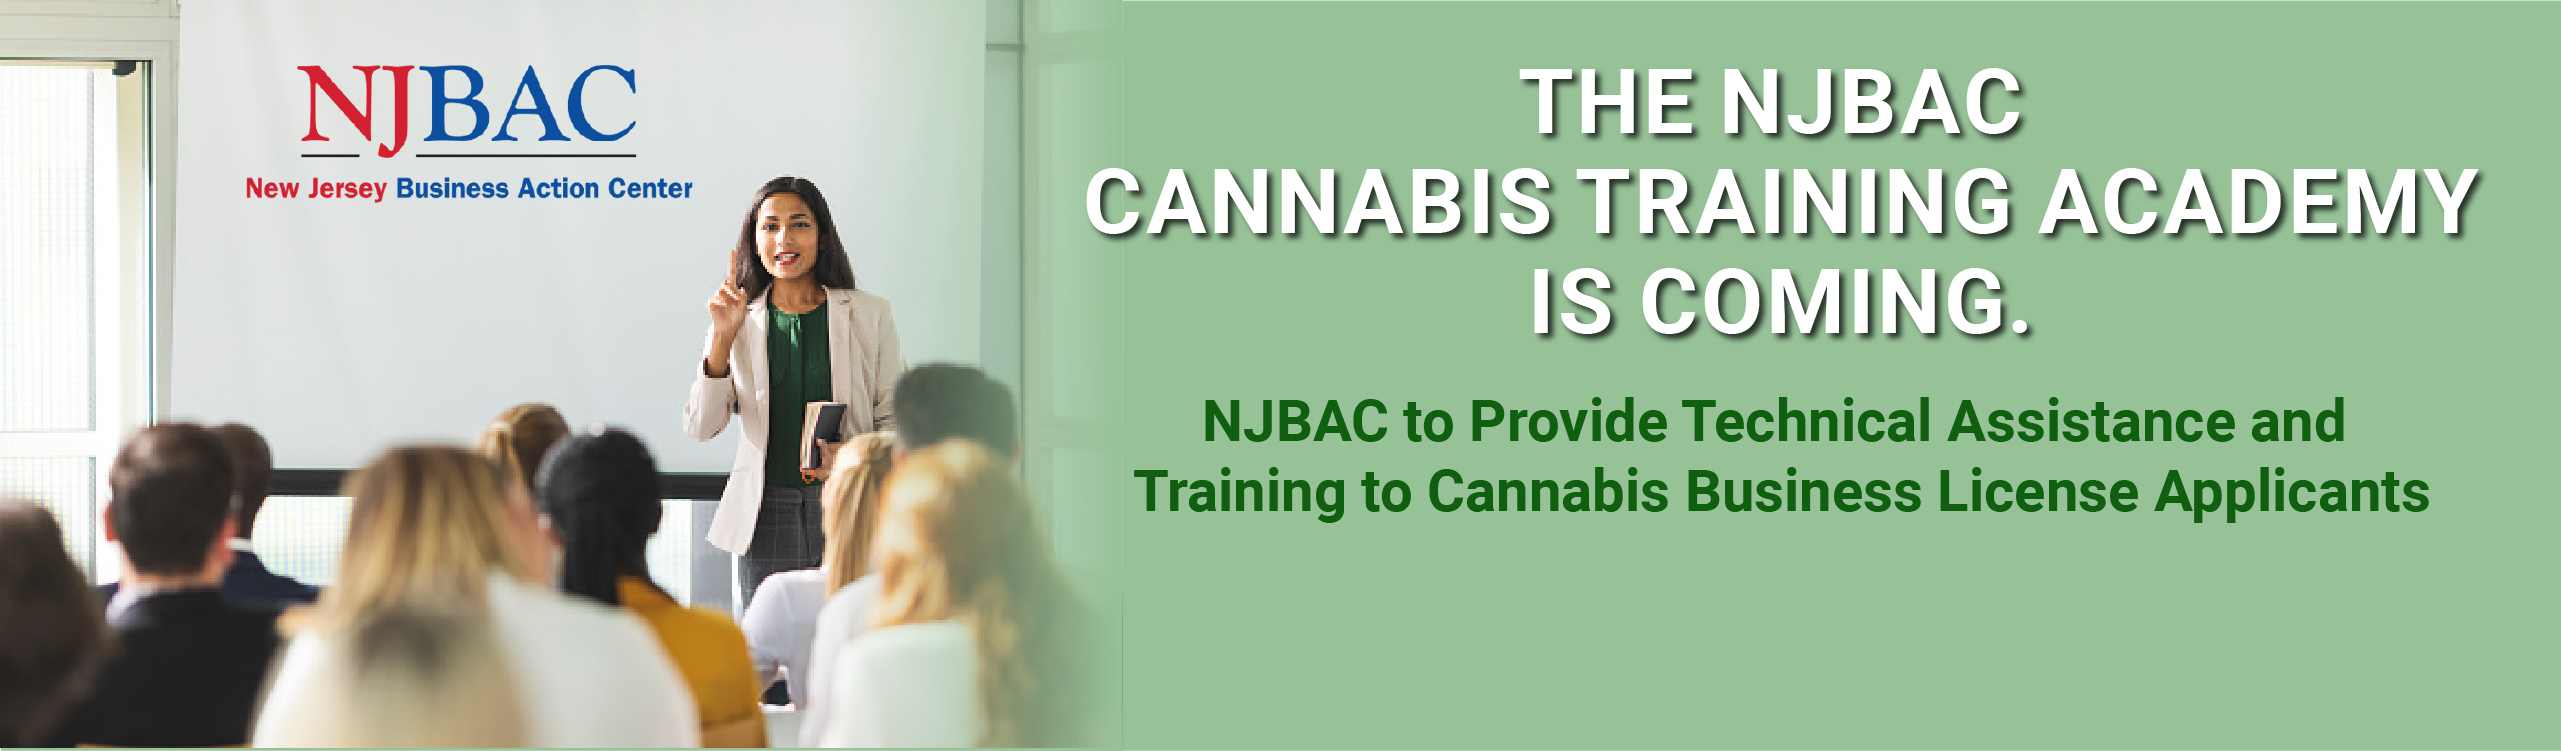 Cannabis Training Academy - Coming Soon